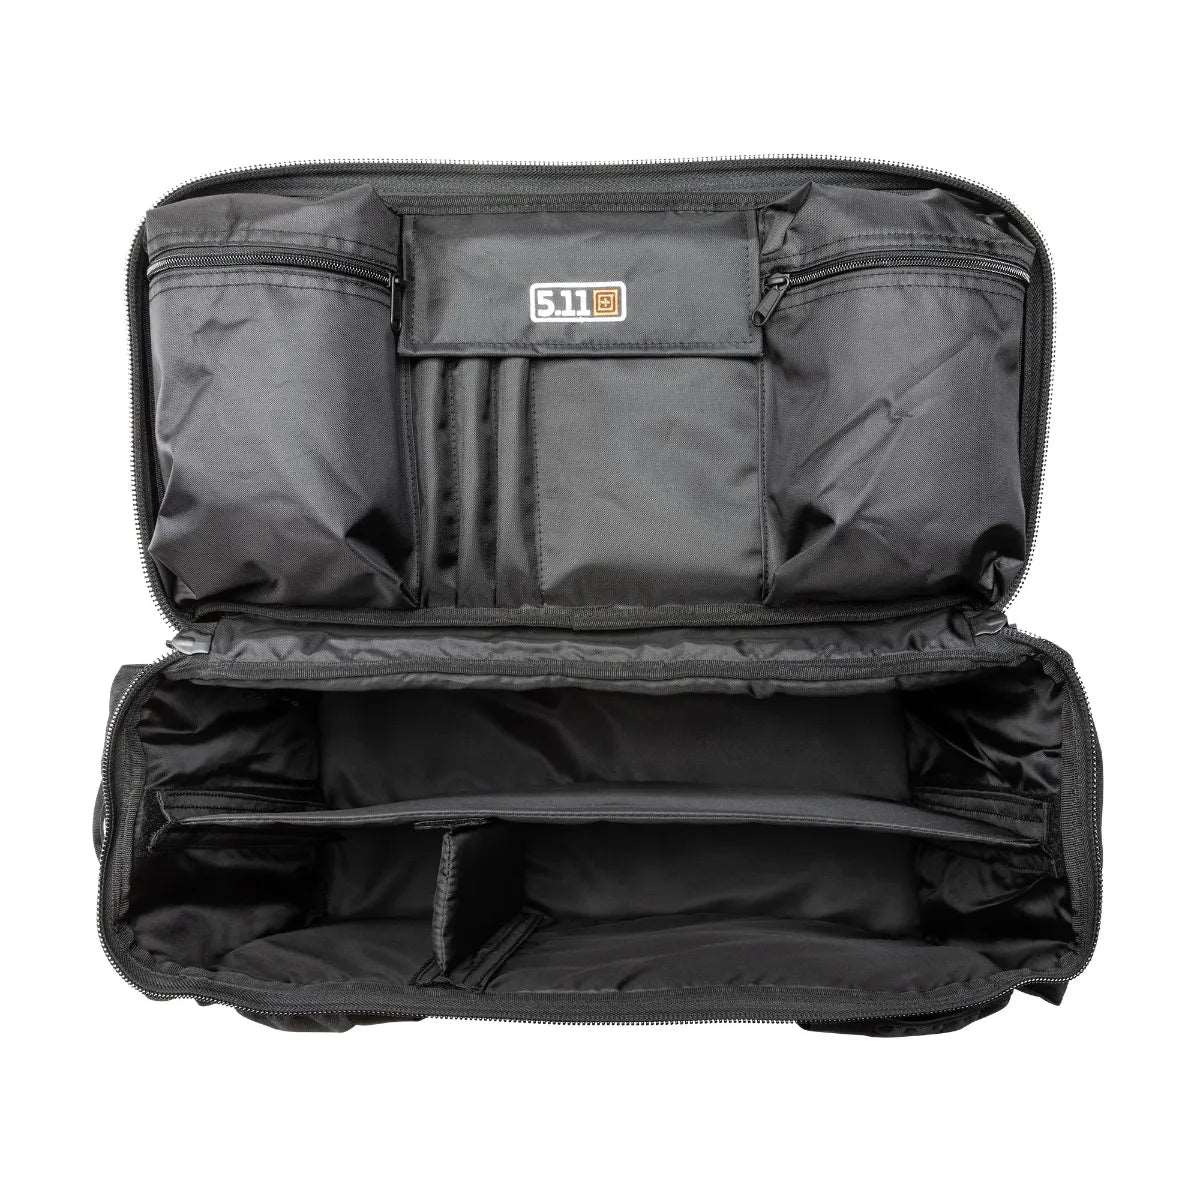 Duffel Bags - 5.11 Tactical Patrol Ready Bag 40L